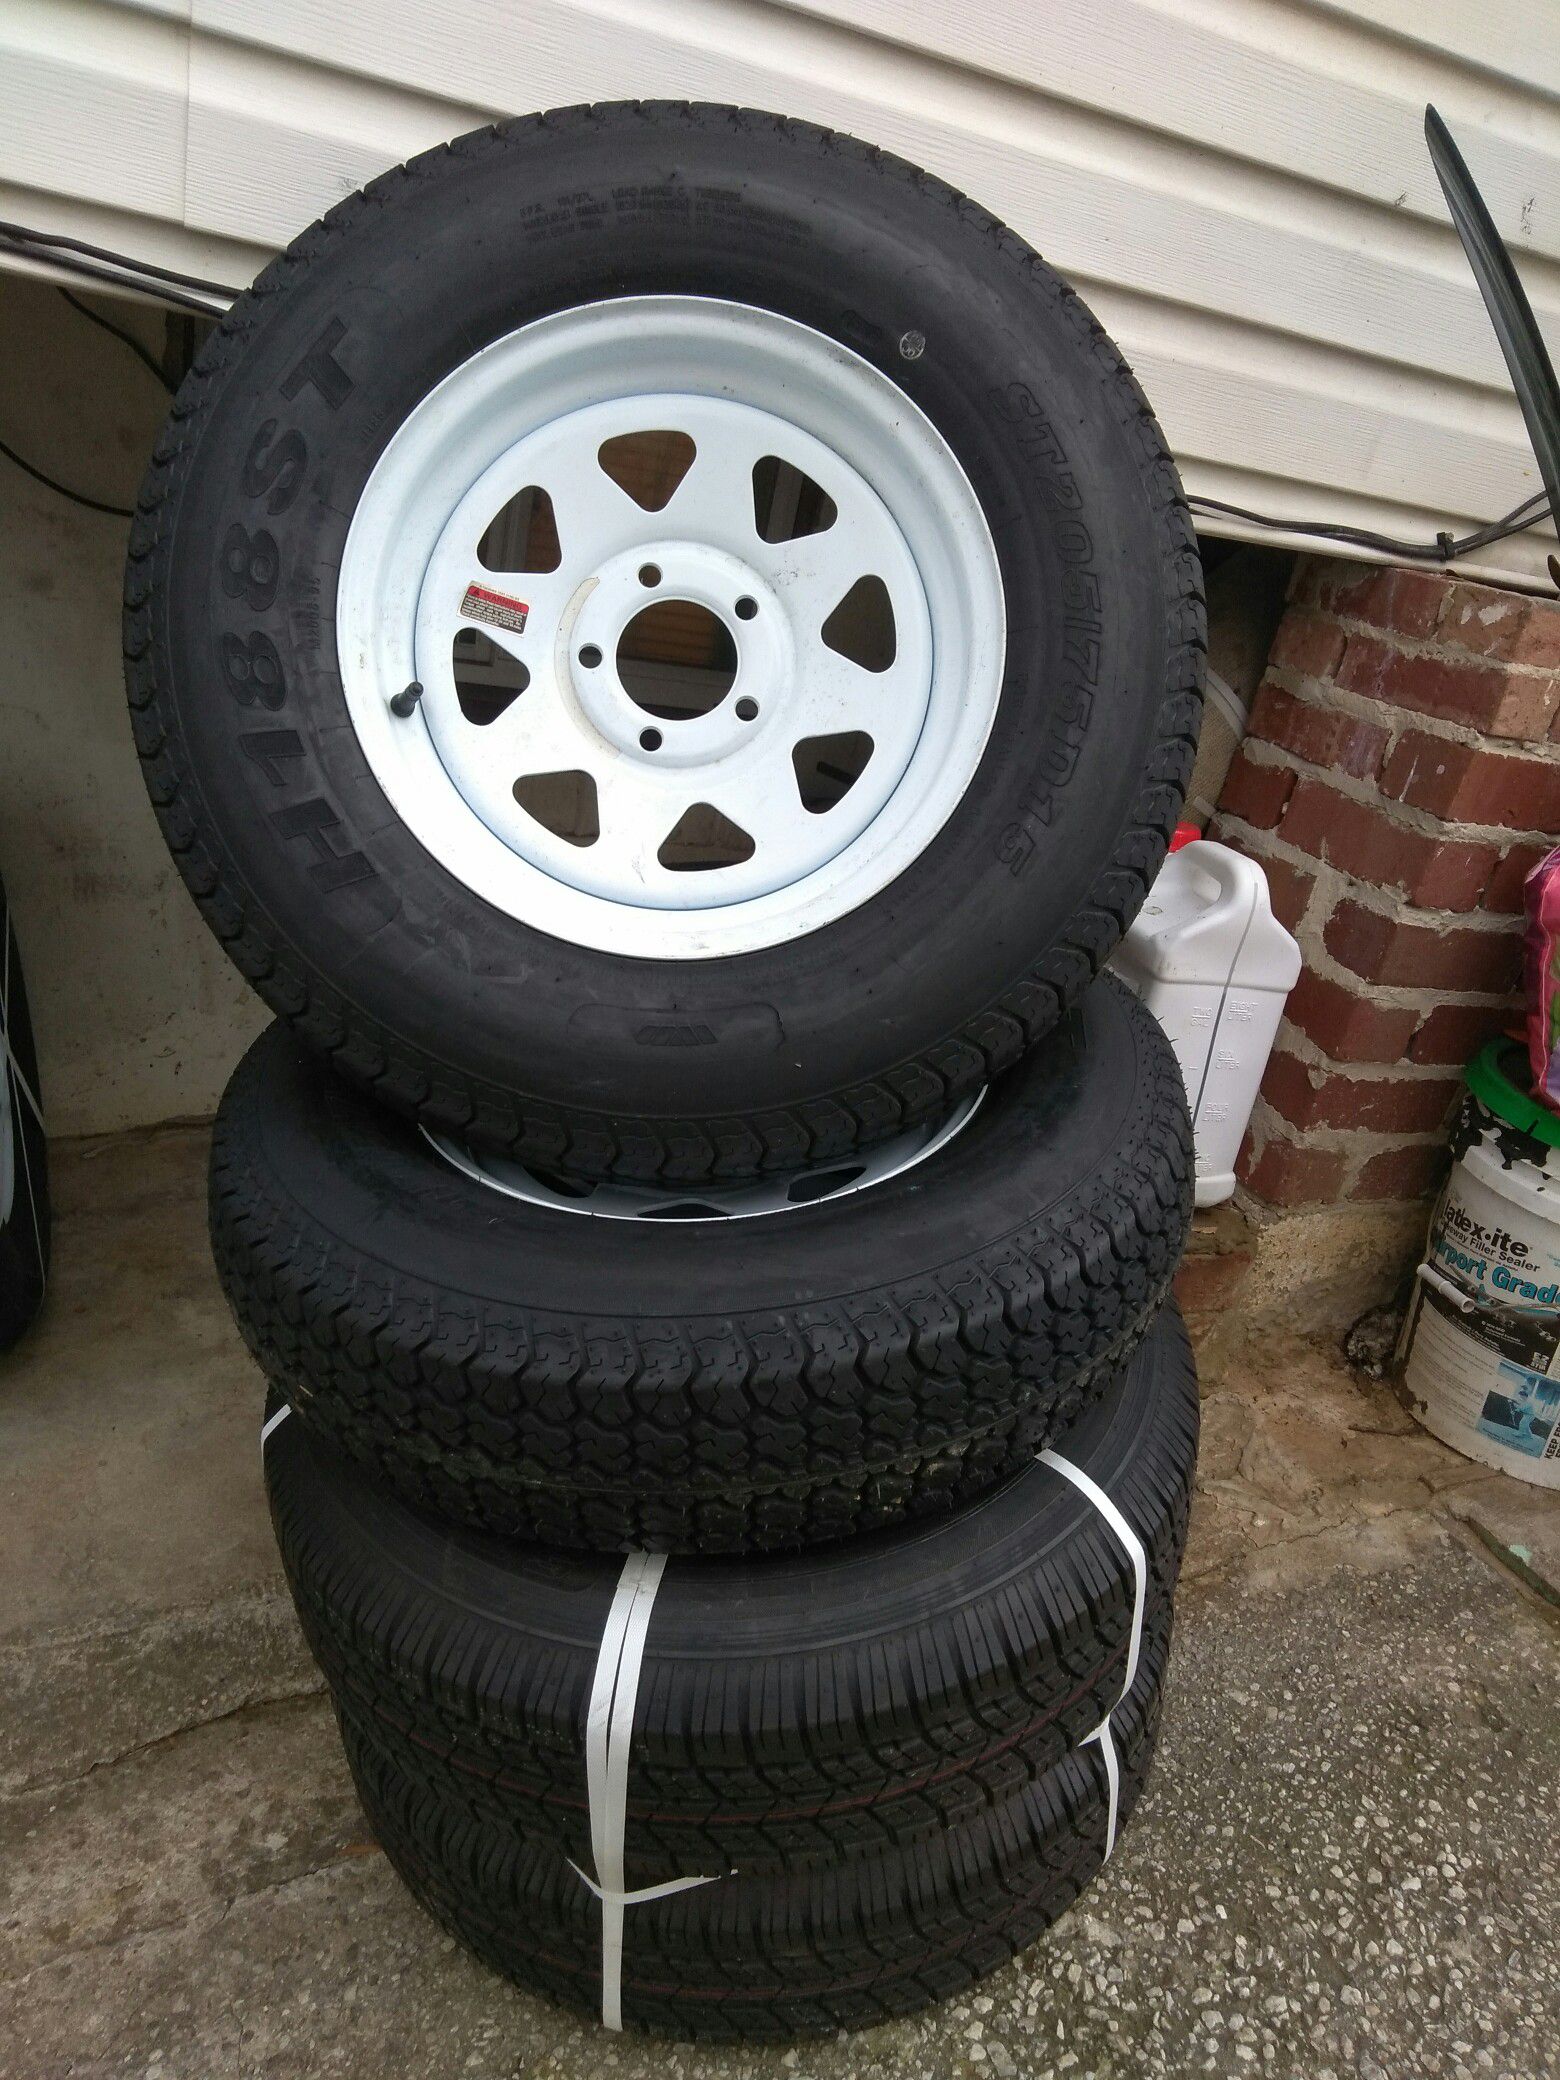 Trailer tires&rim new (4) 205/75/15 4.5